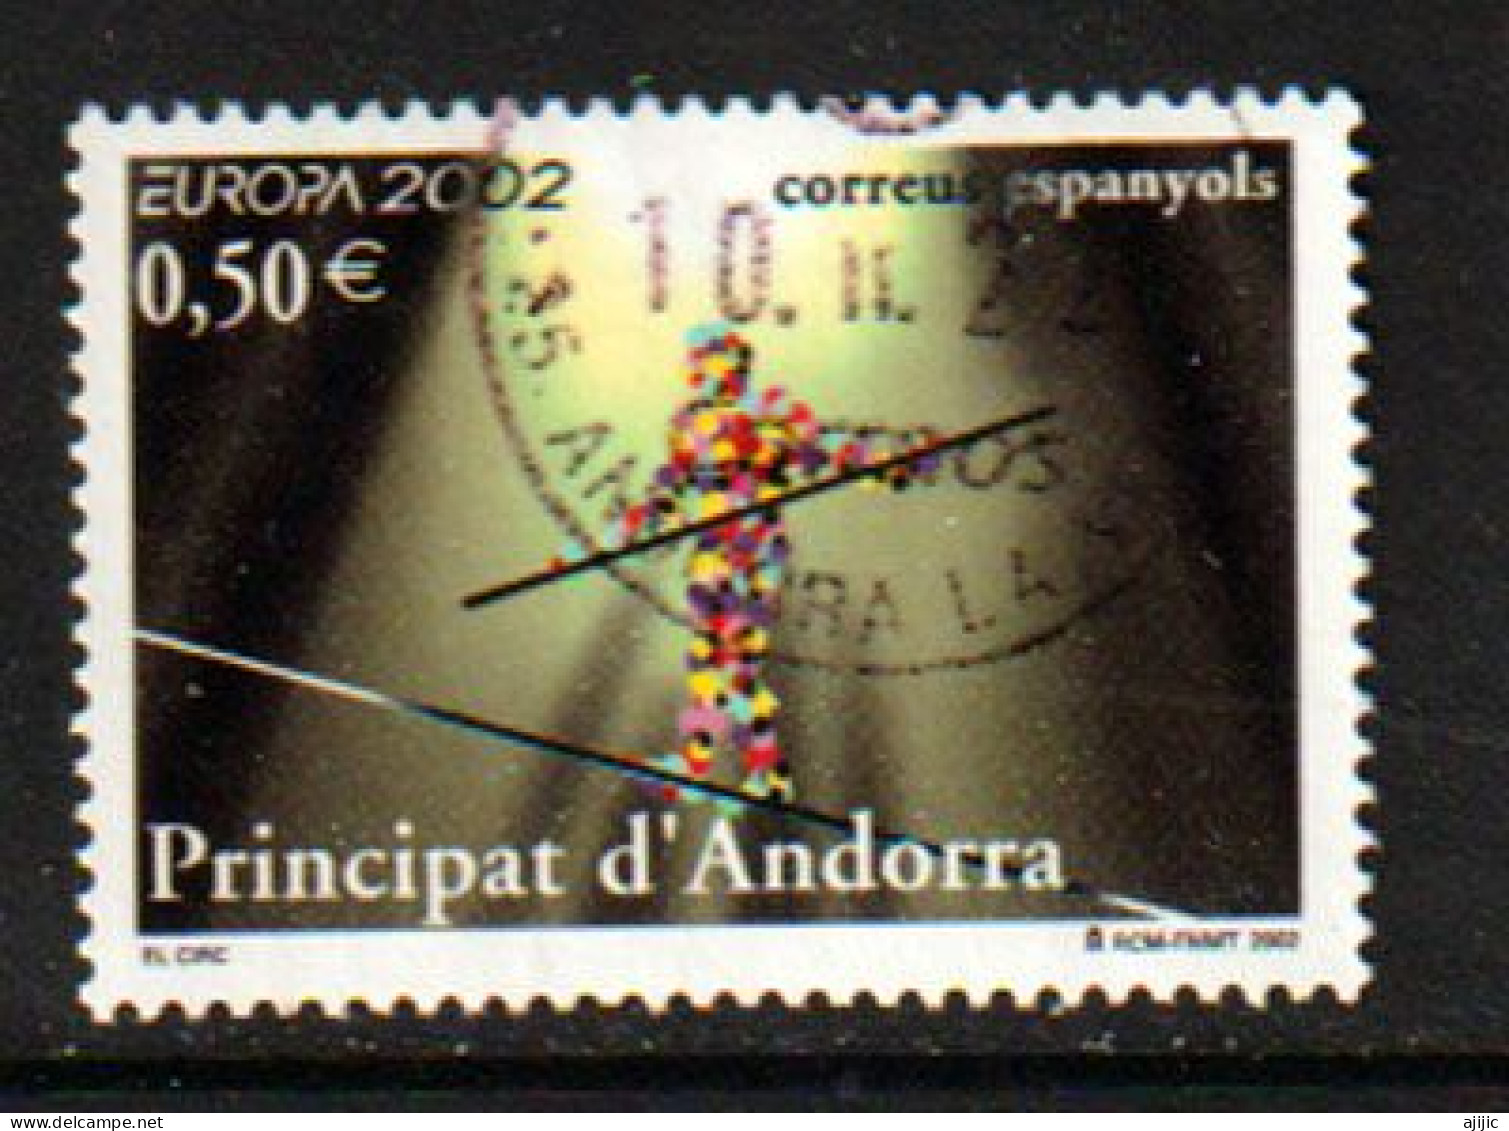 2002. Europa Andorra "El Circo" Cancelada 1ª Calidad (alto Valor De Catálogo) - Used Stamps